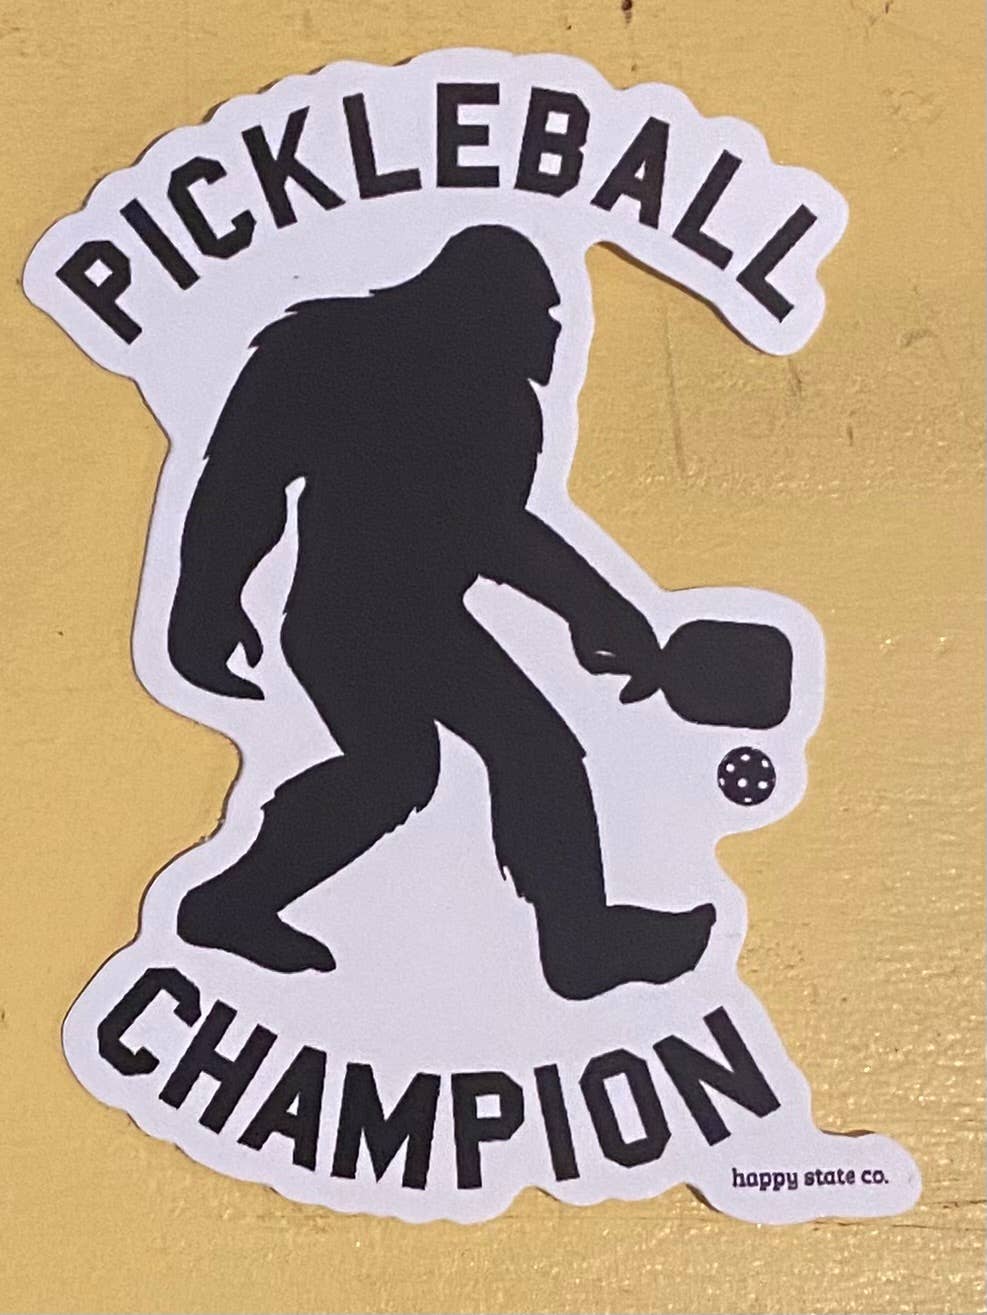 Happy State Co - Pickle ball champion Sasquatch sticker pickleball